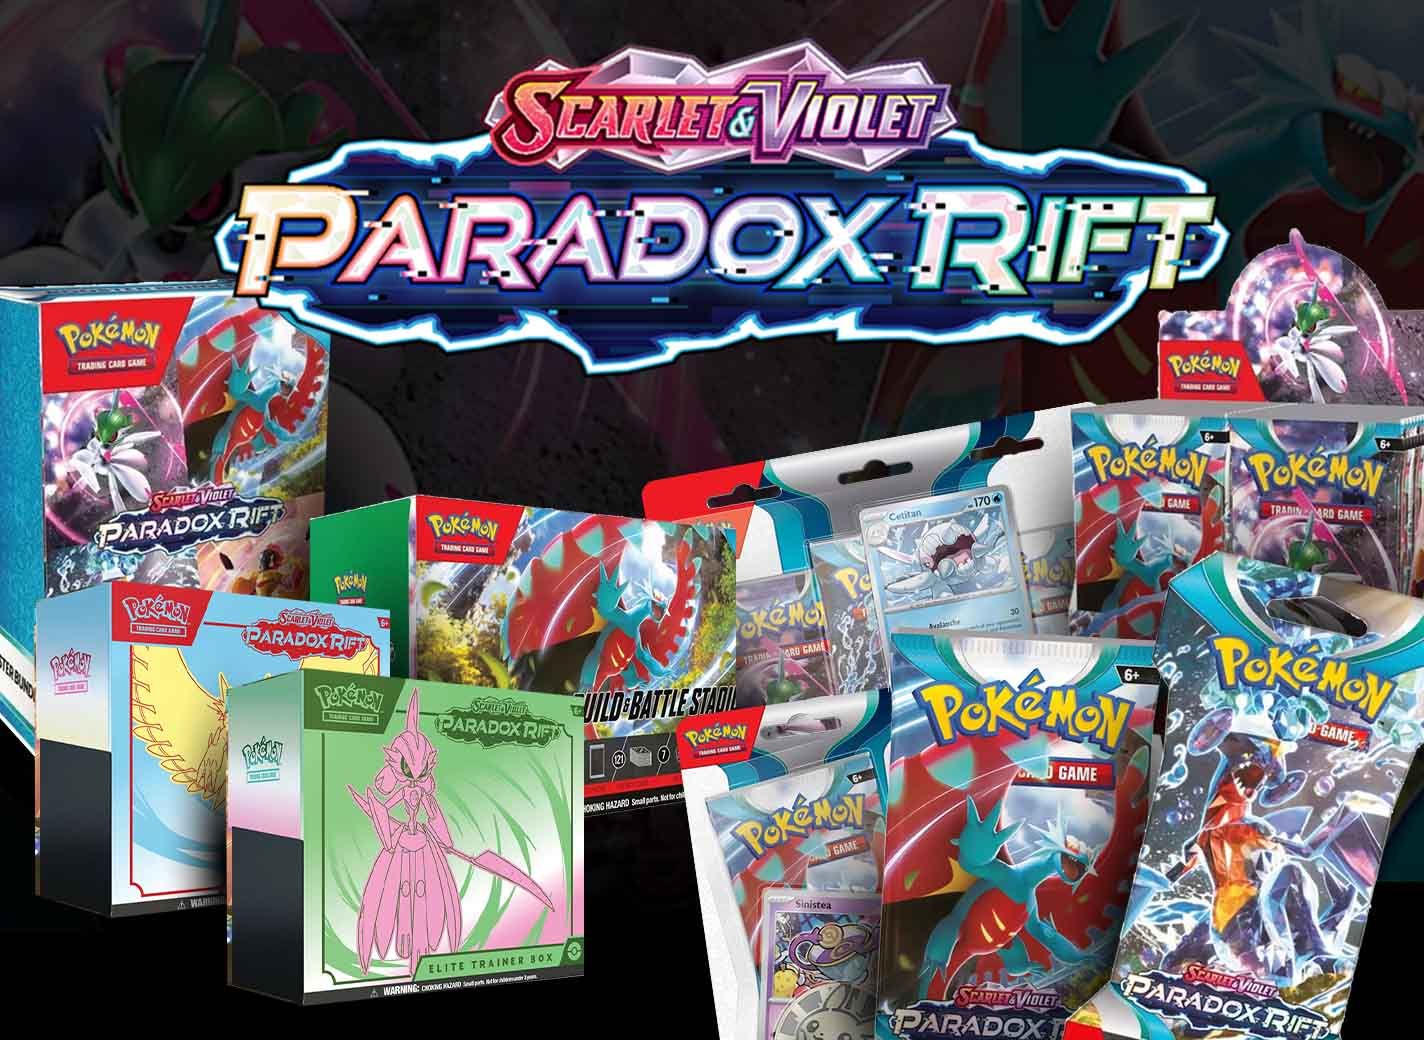 Paradox Rift Elite Trainer Box